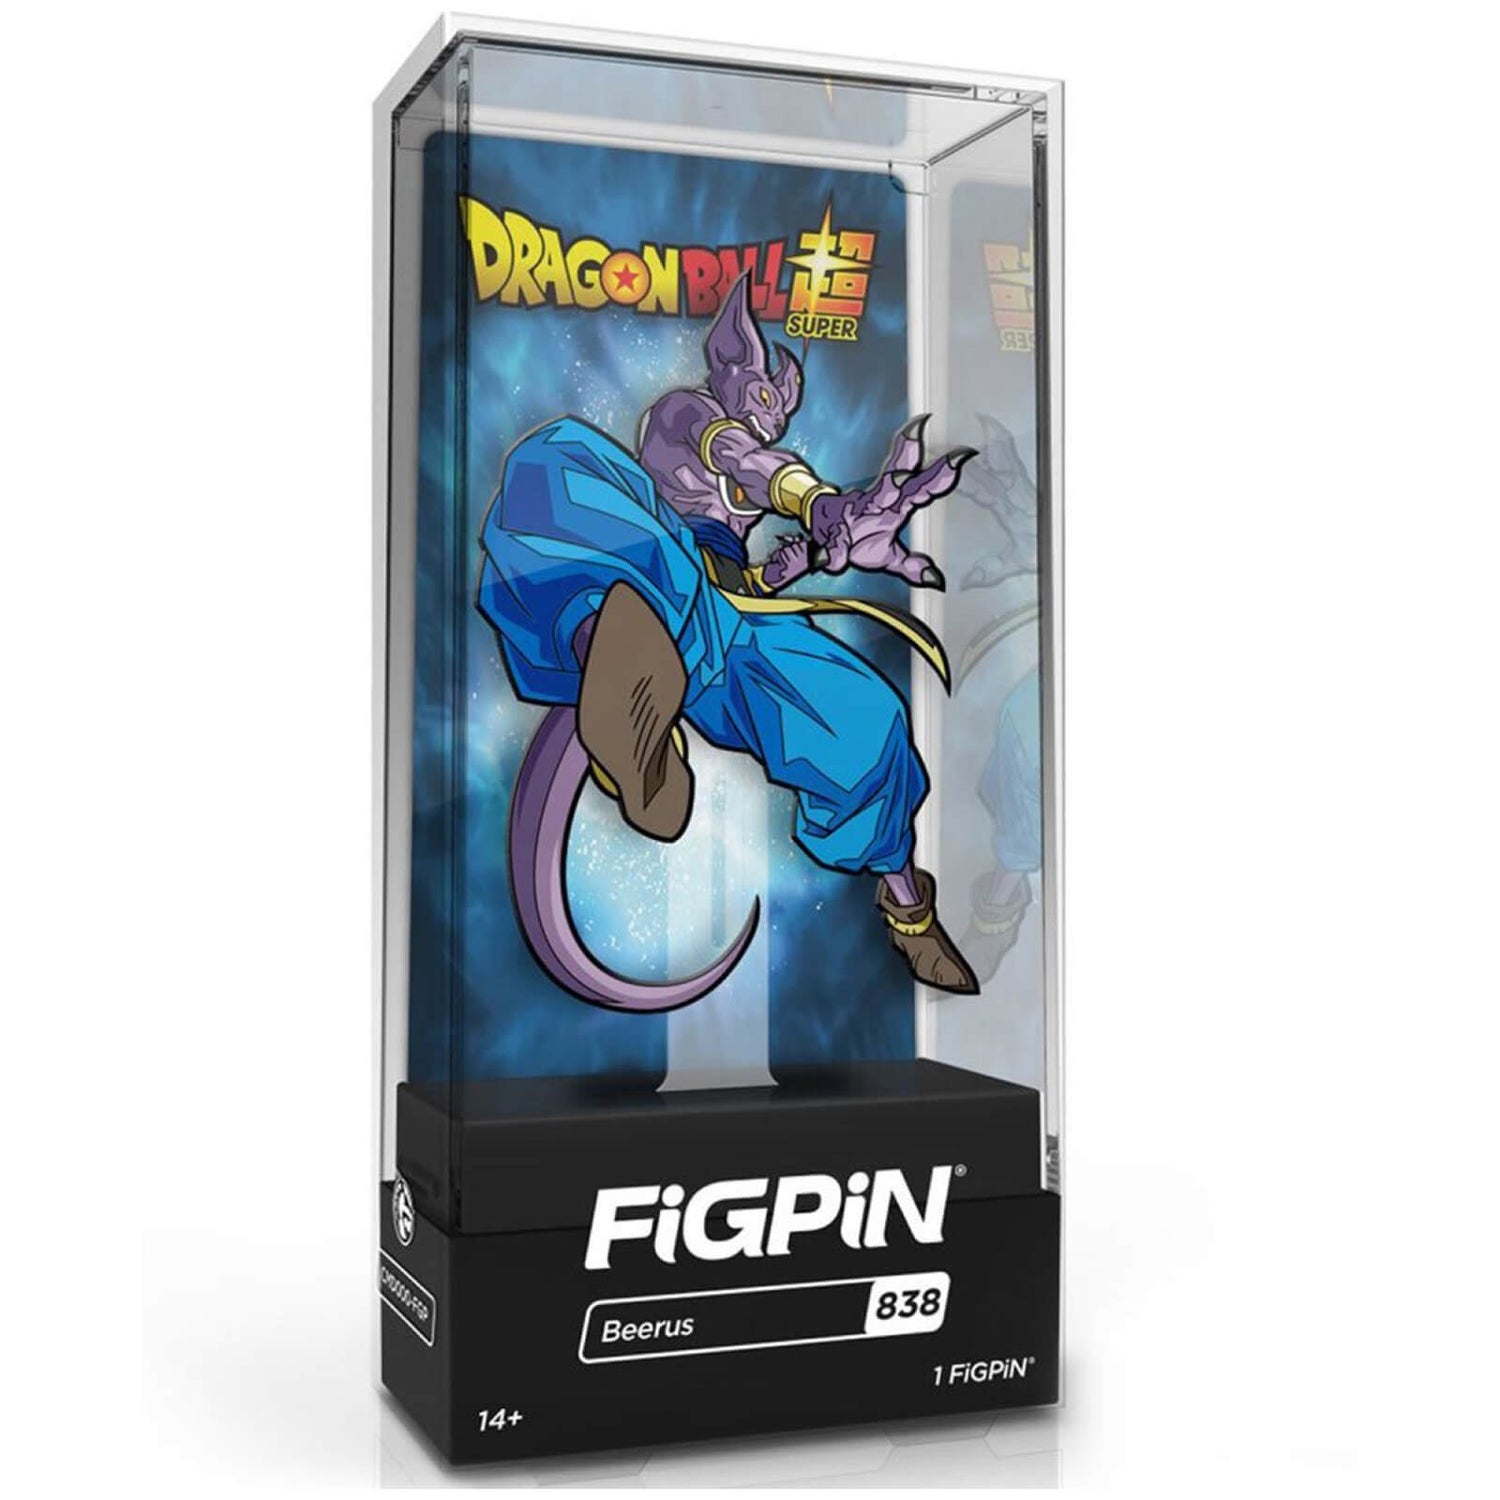 FiGPiN Dragon Ball Super 3" Enamel Pin - Beerus